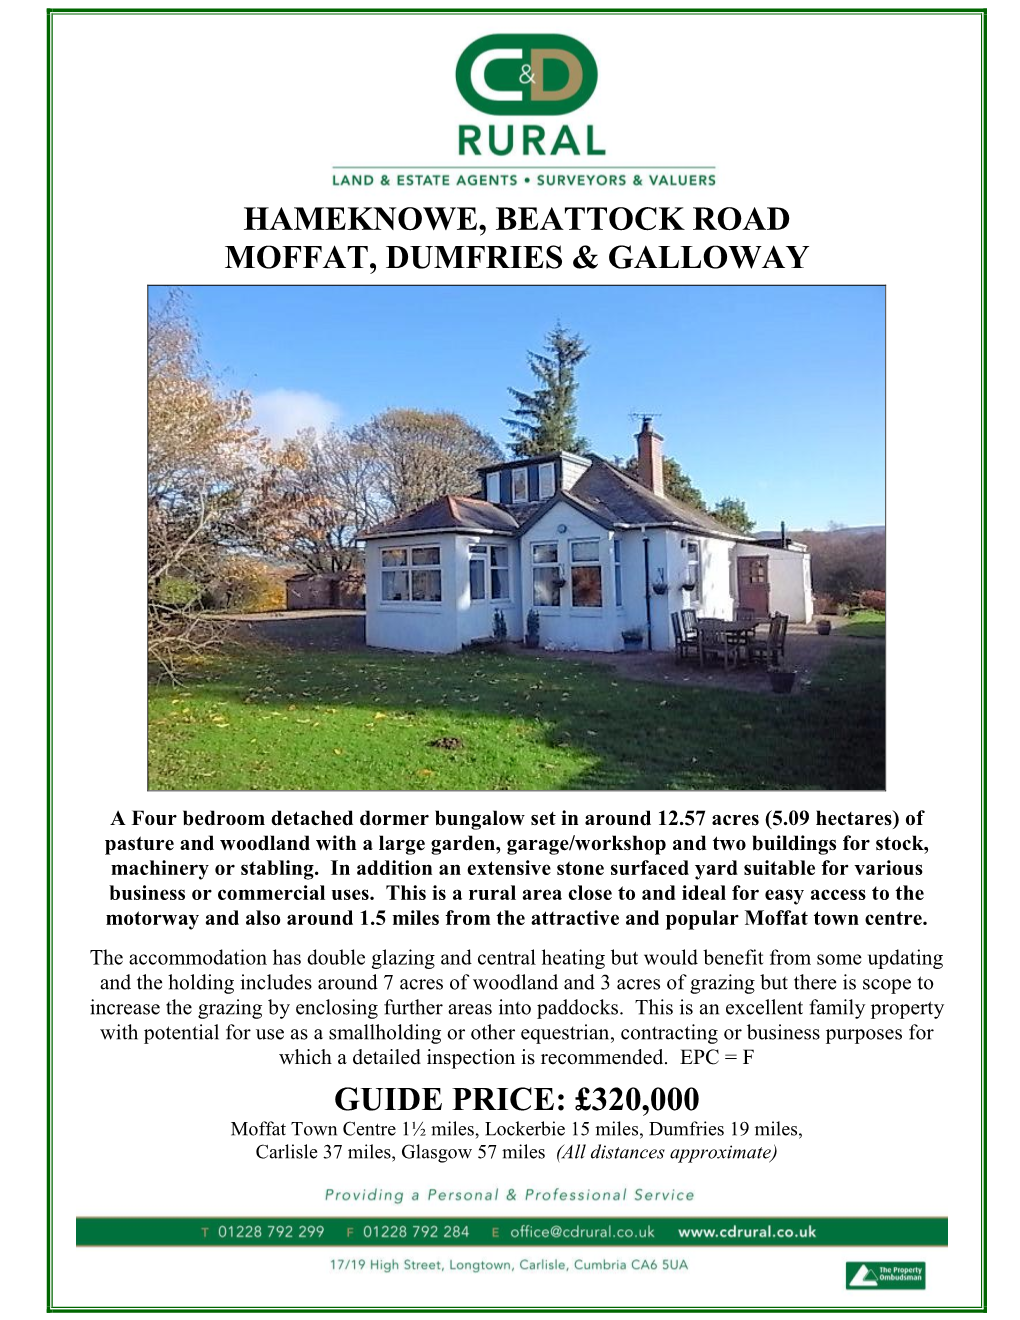 Hameknowe, Beattock Road Moffat, Dumfries & Galloway